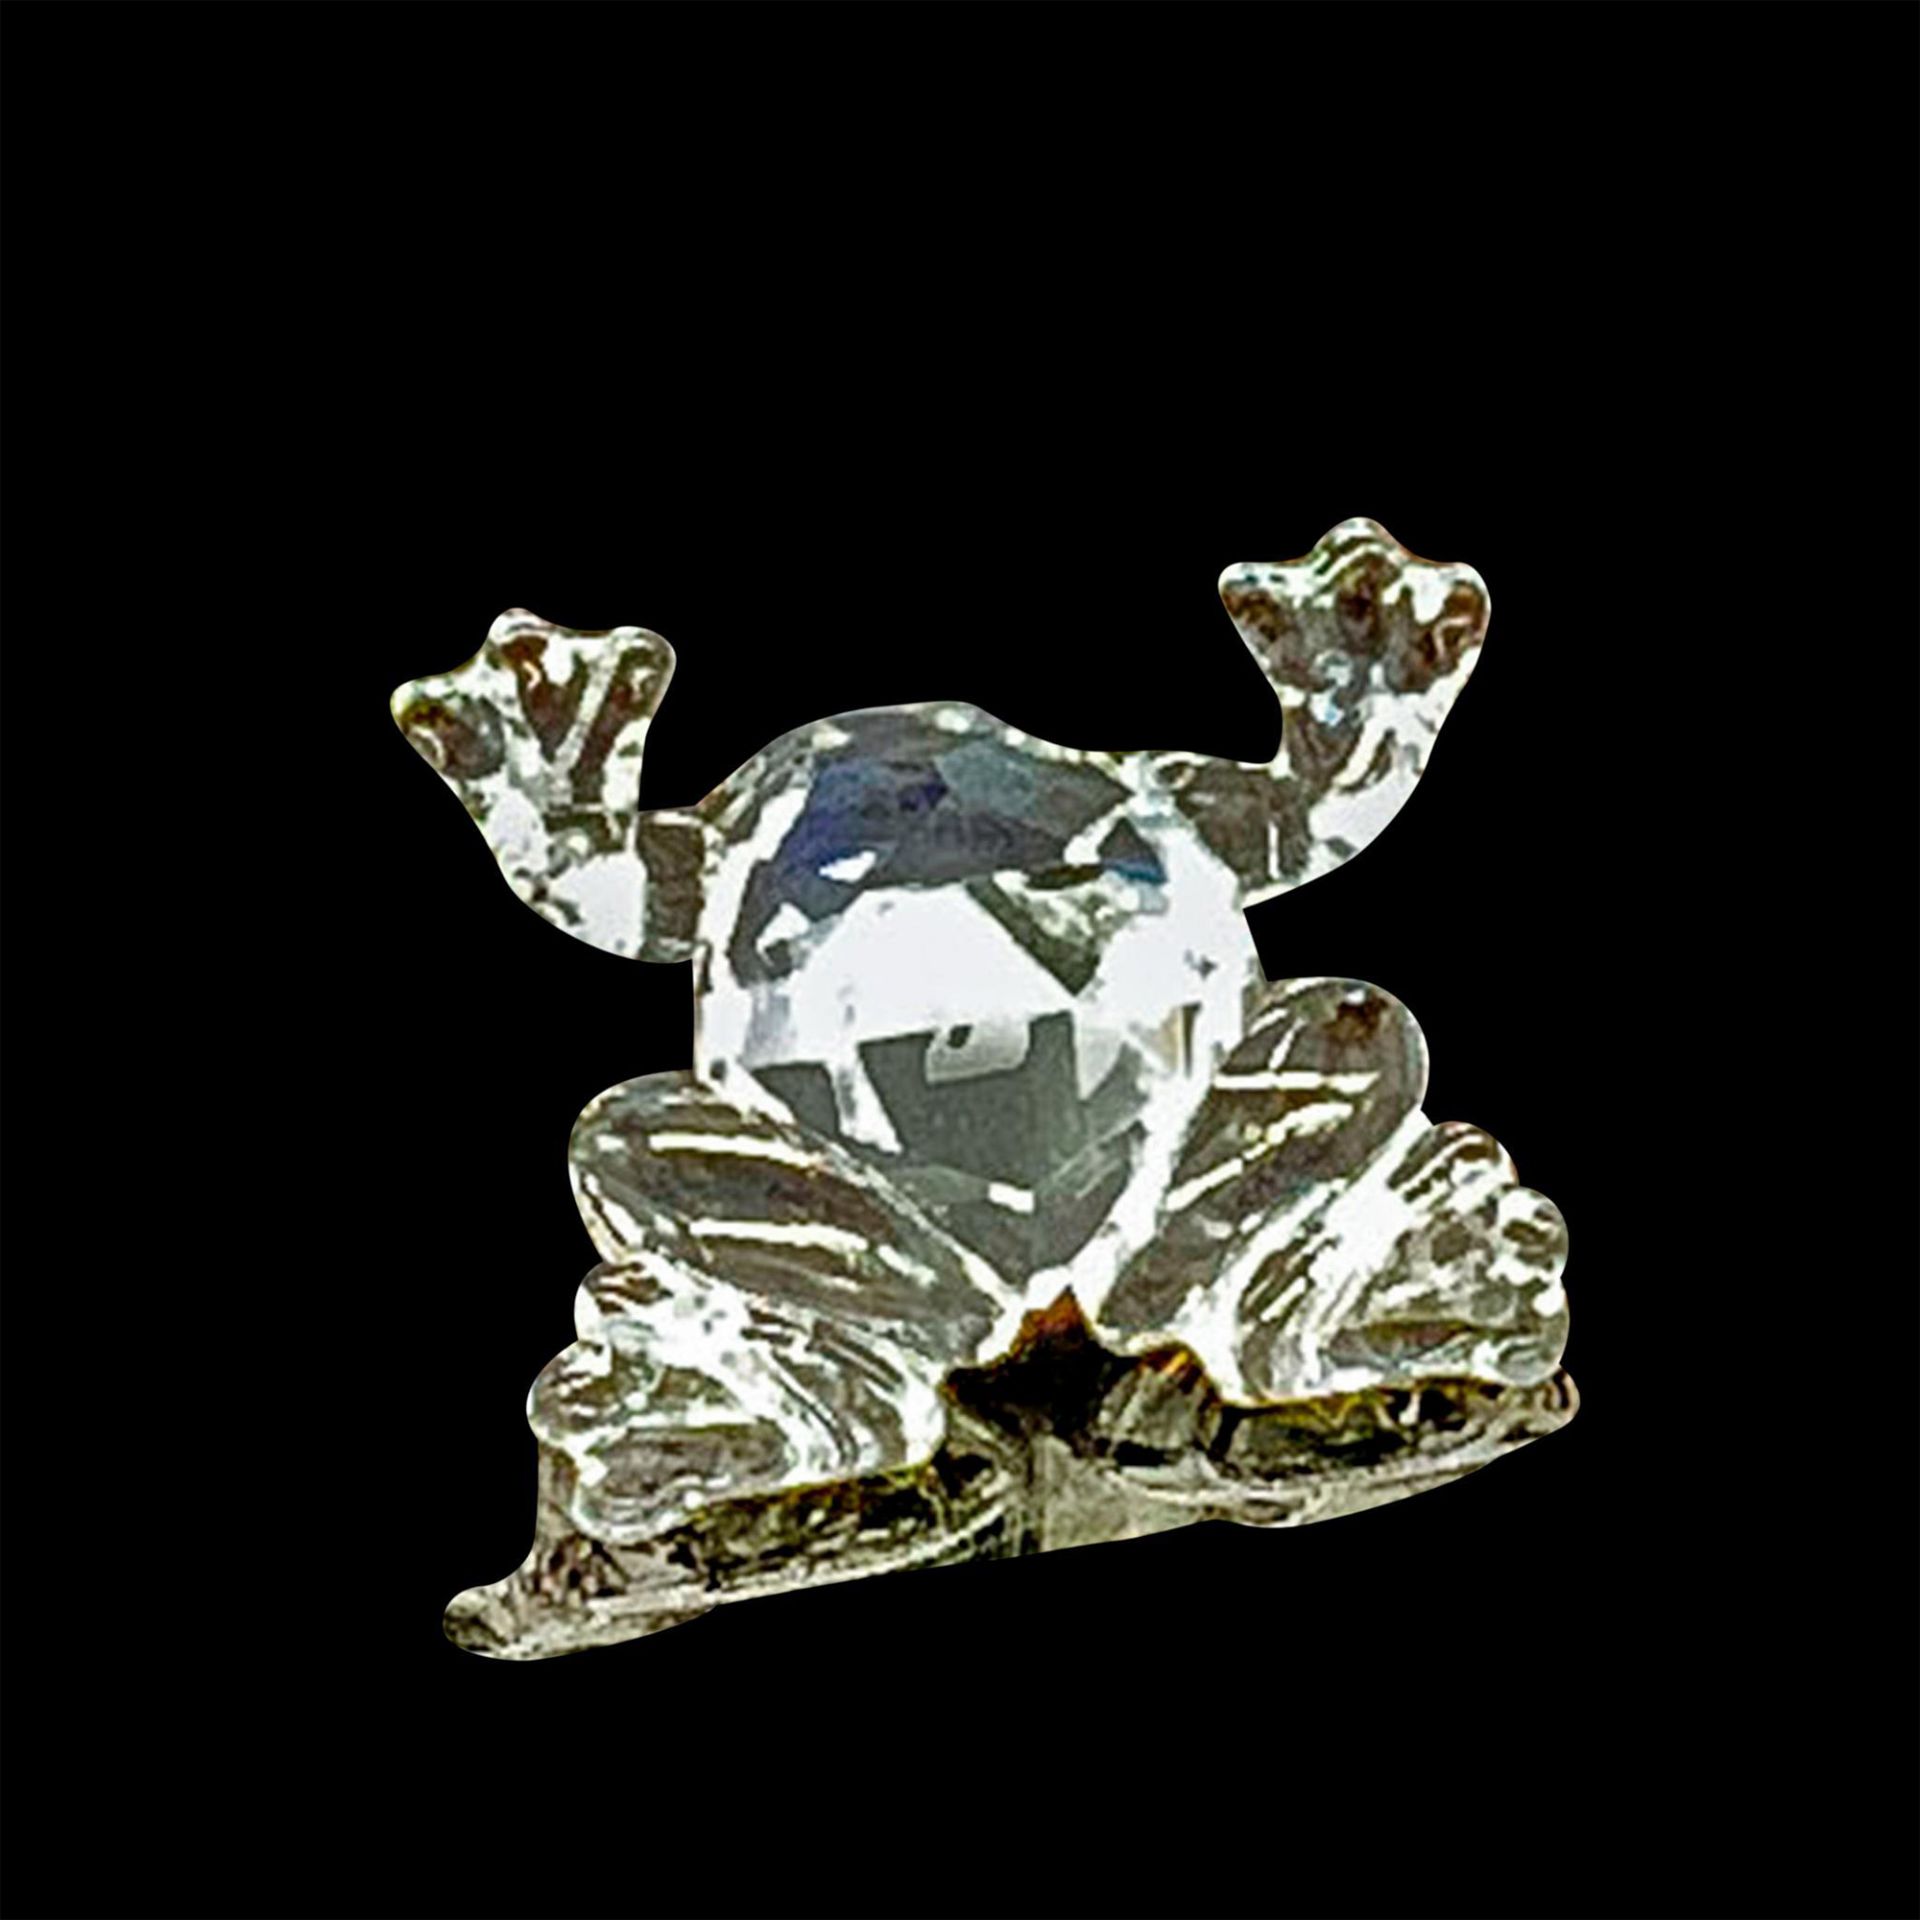 Swarovski Crystal Figurine, Frog Baby 286313 - Image 3 of 4